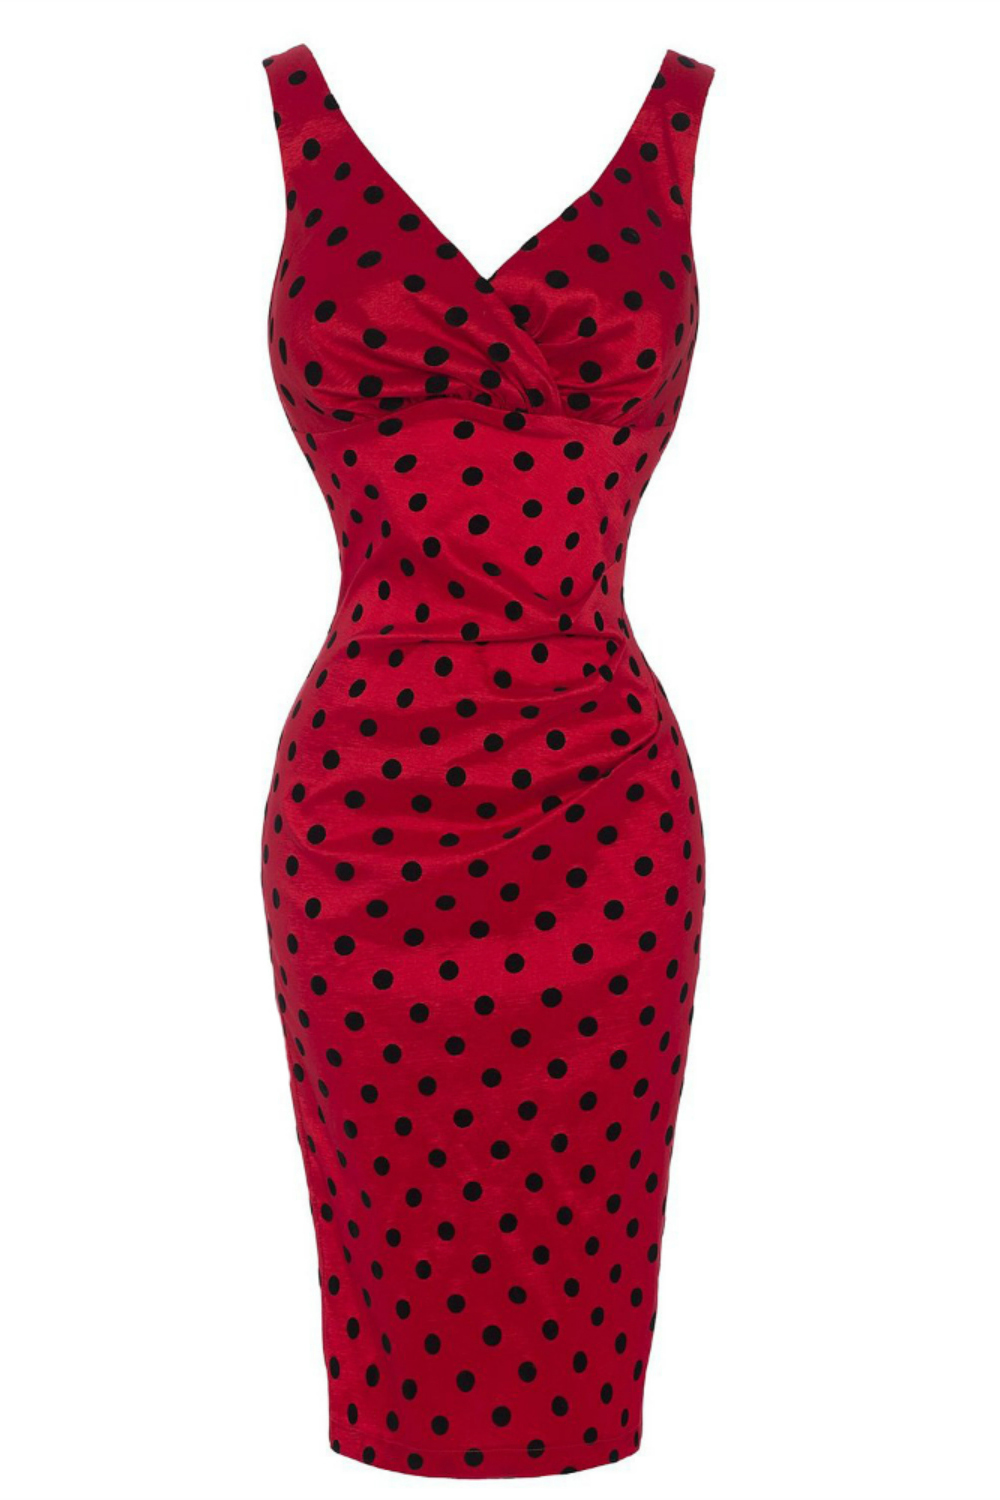 Voodoo Vixen Adrina Dress | Red Black Polka Dot Dress | 1950s Fabulous ...